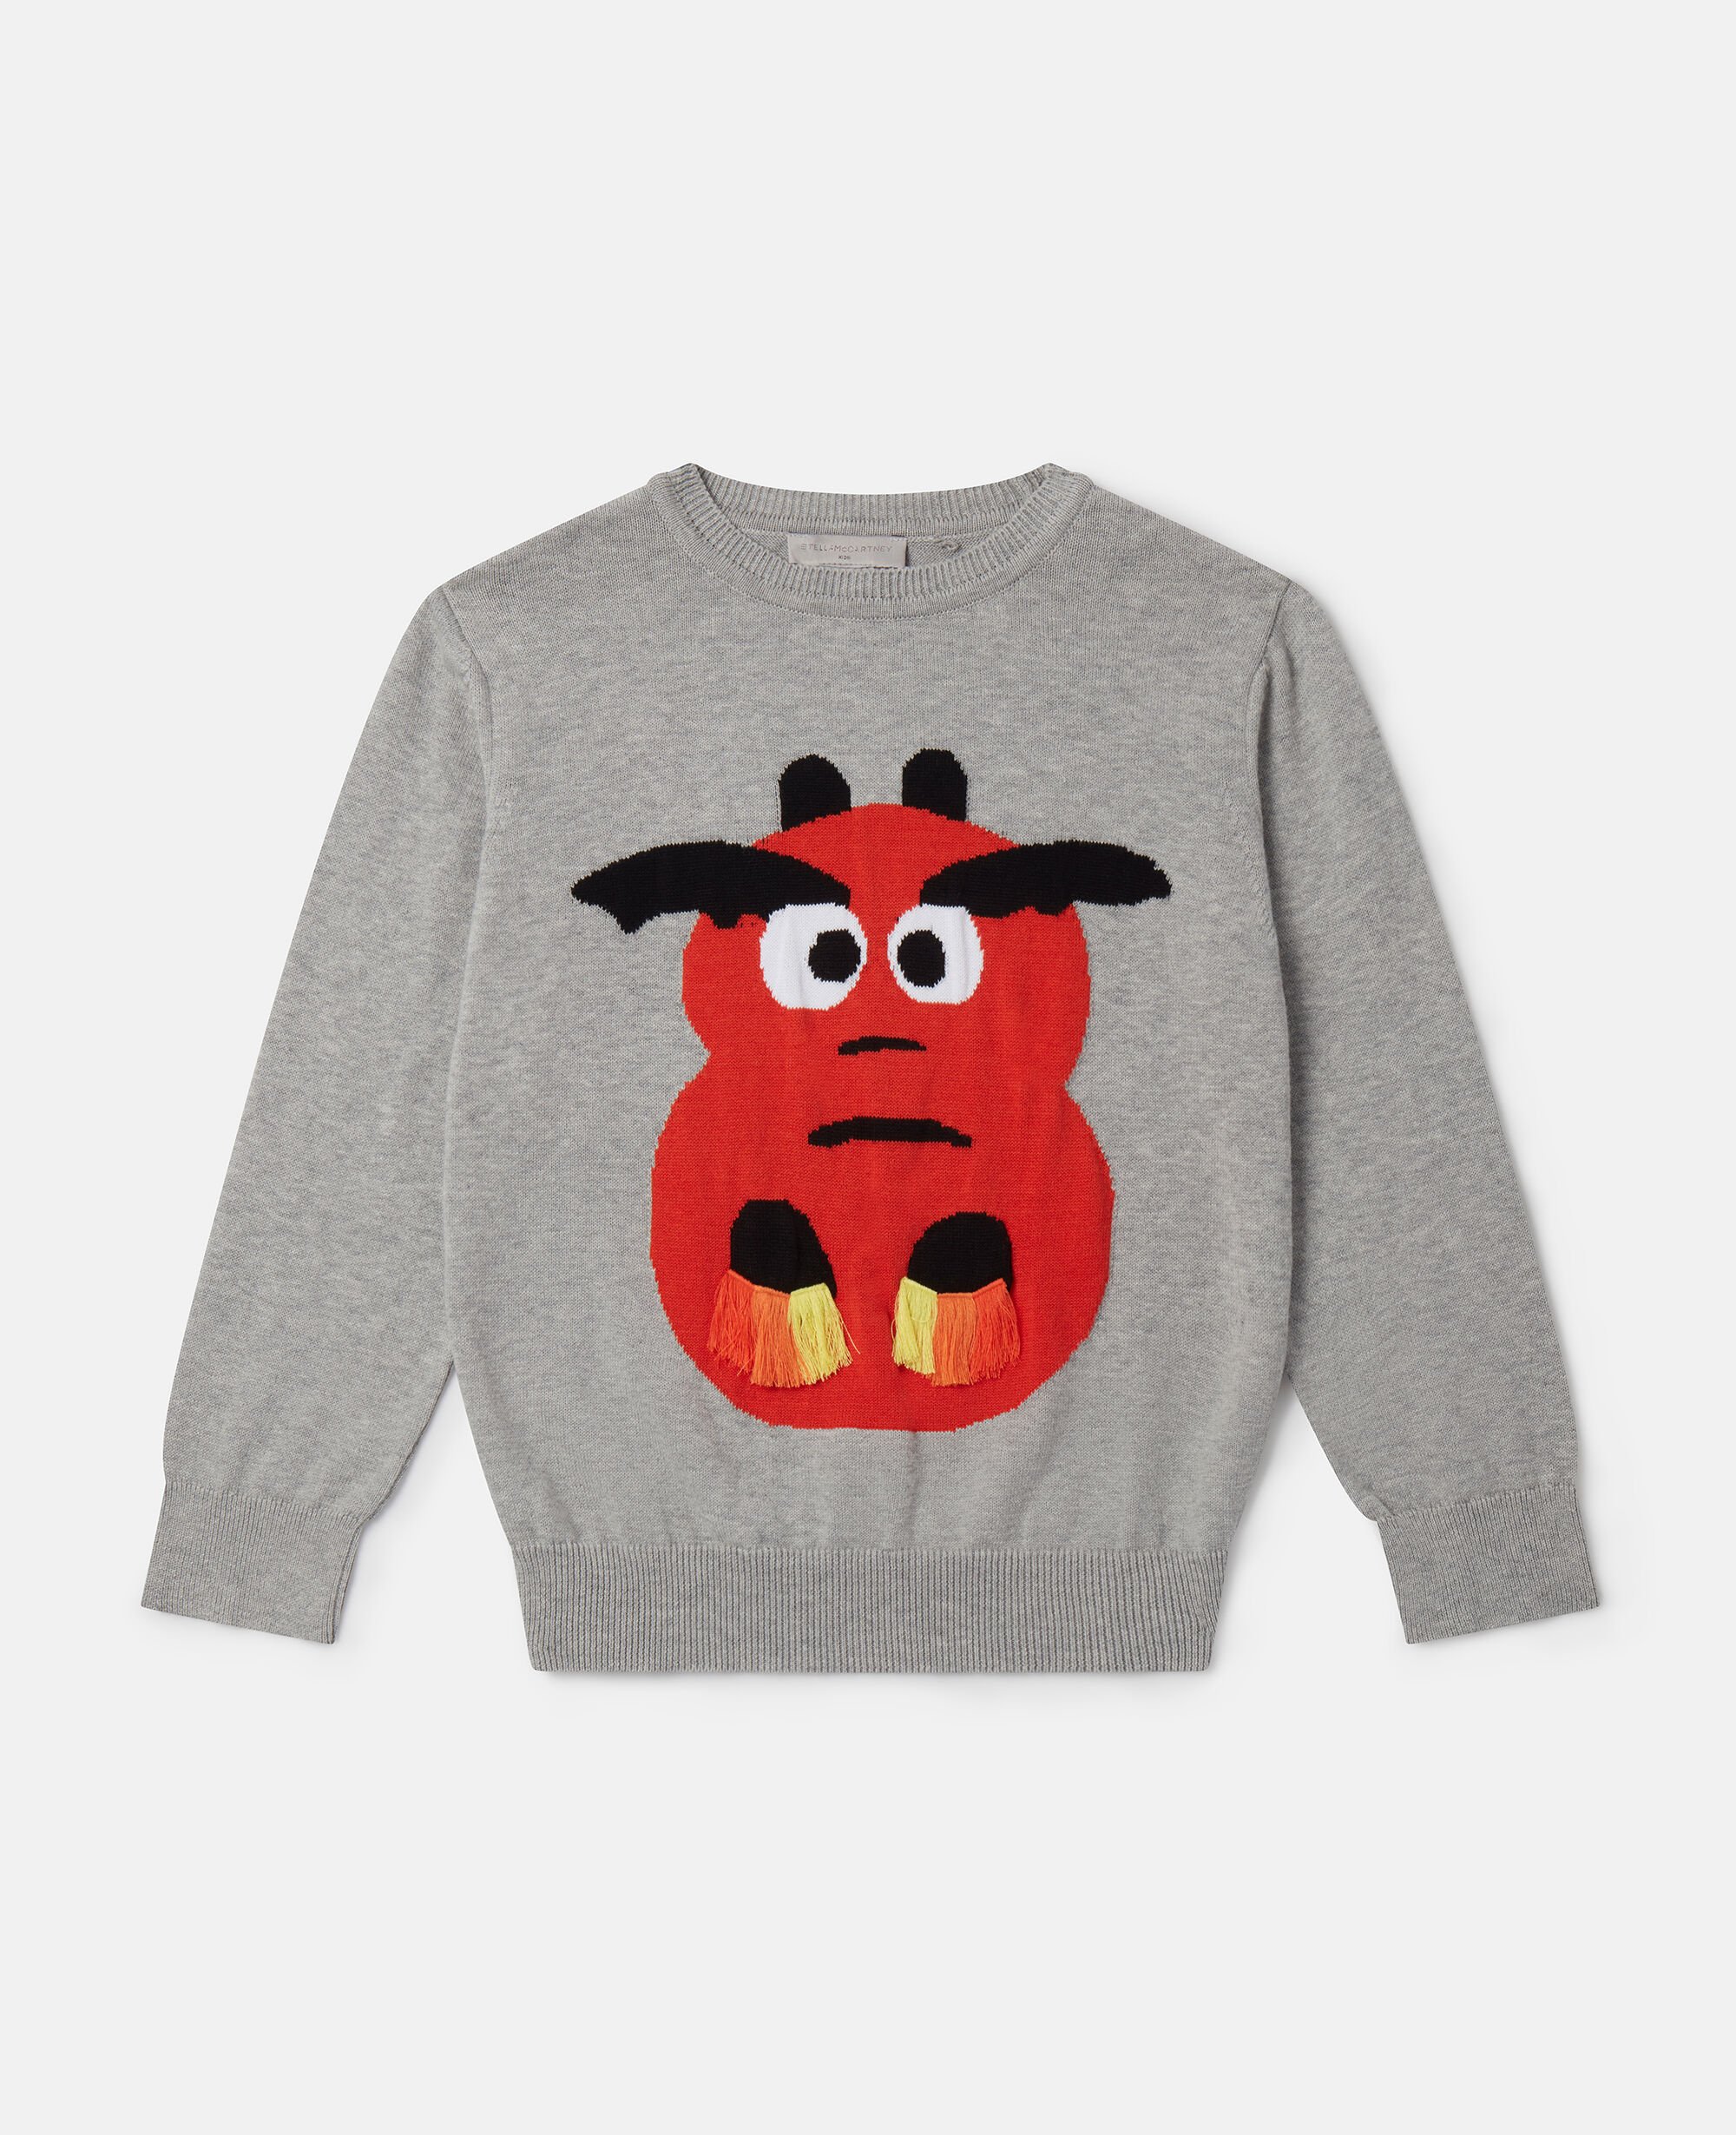 Stella McCartney Kids graphic-print cotton sweatshirt - 412 RED